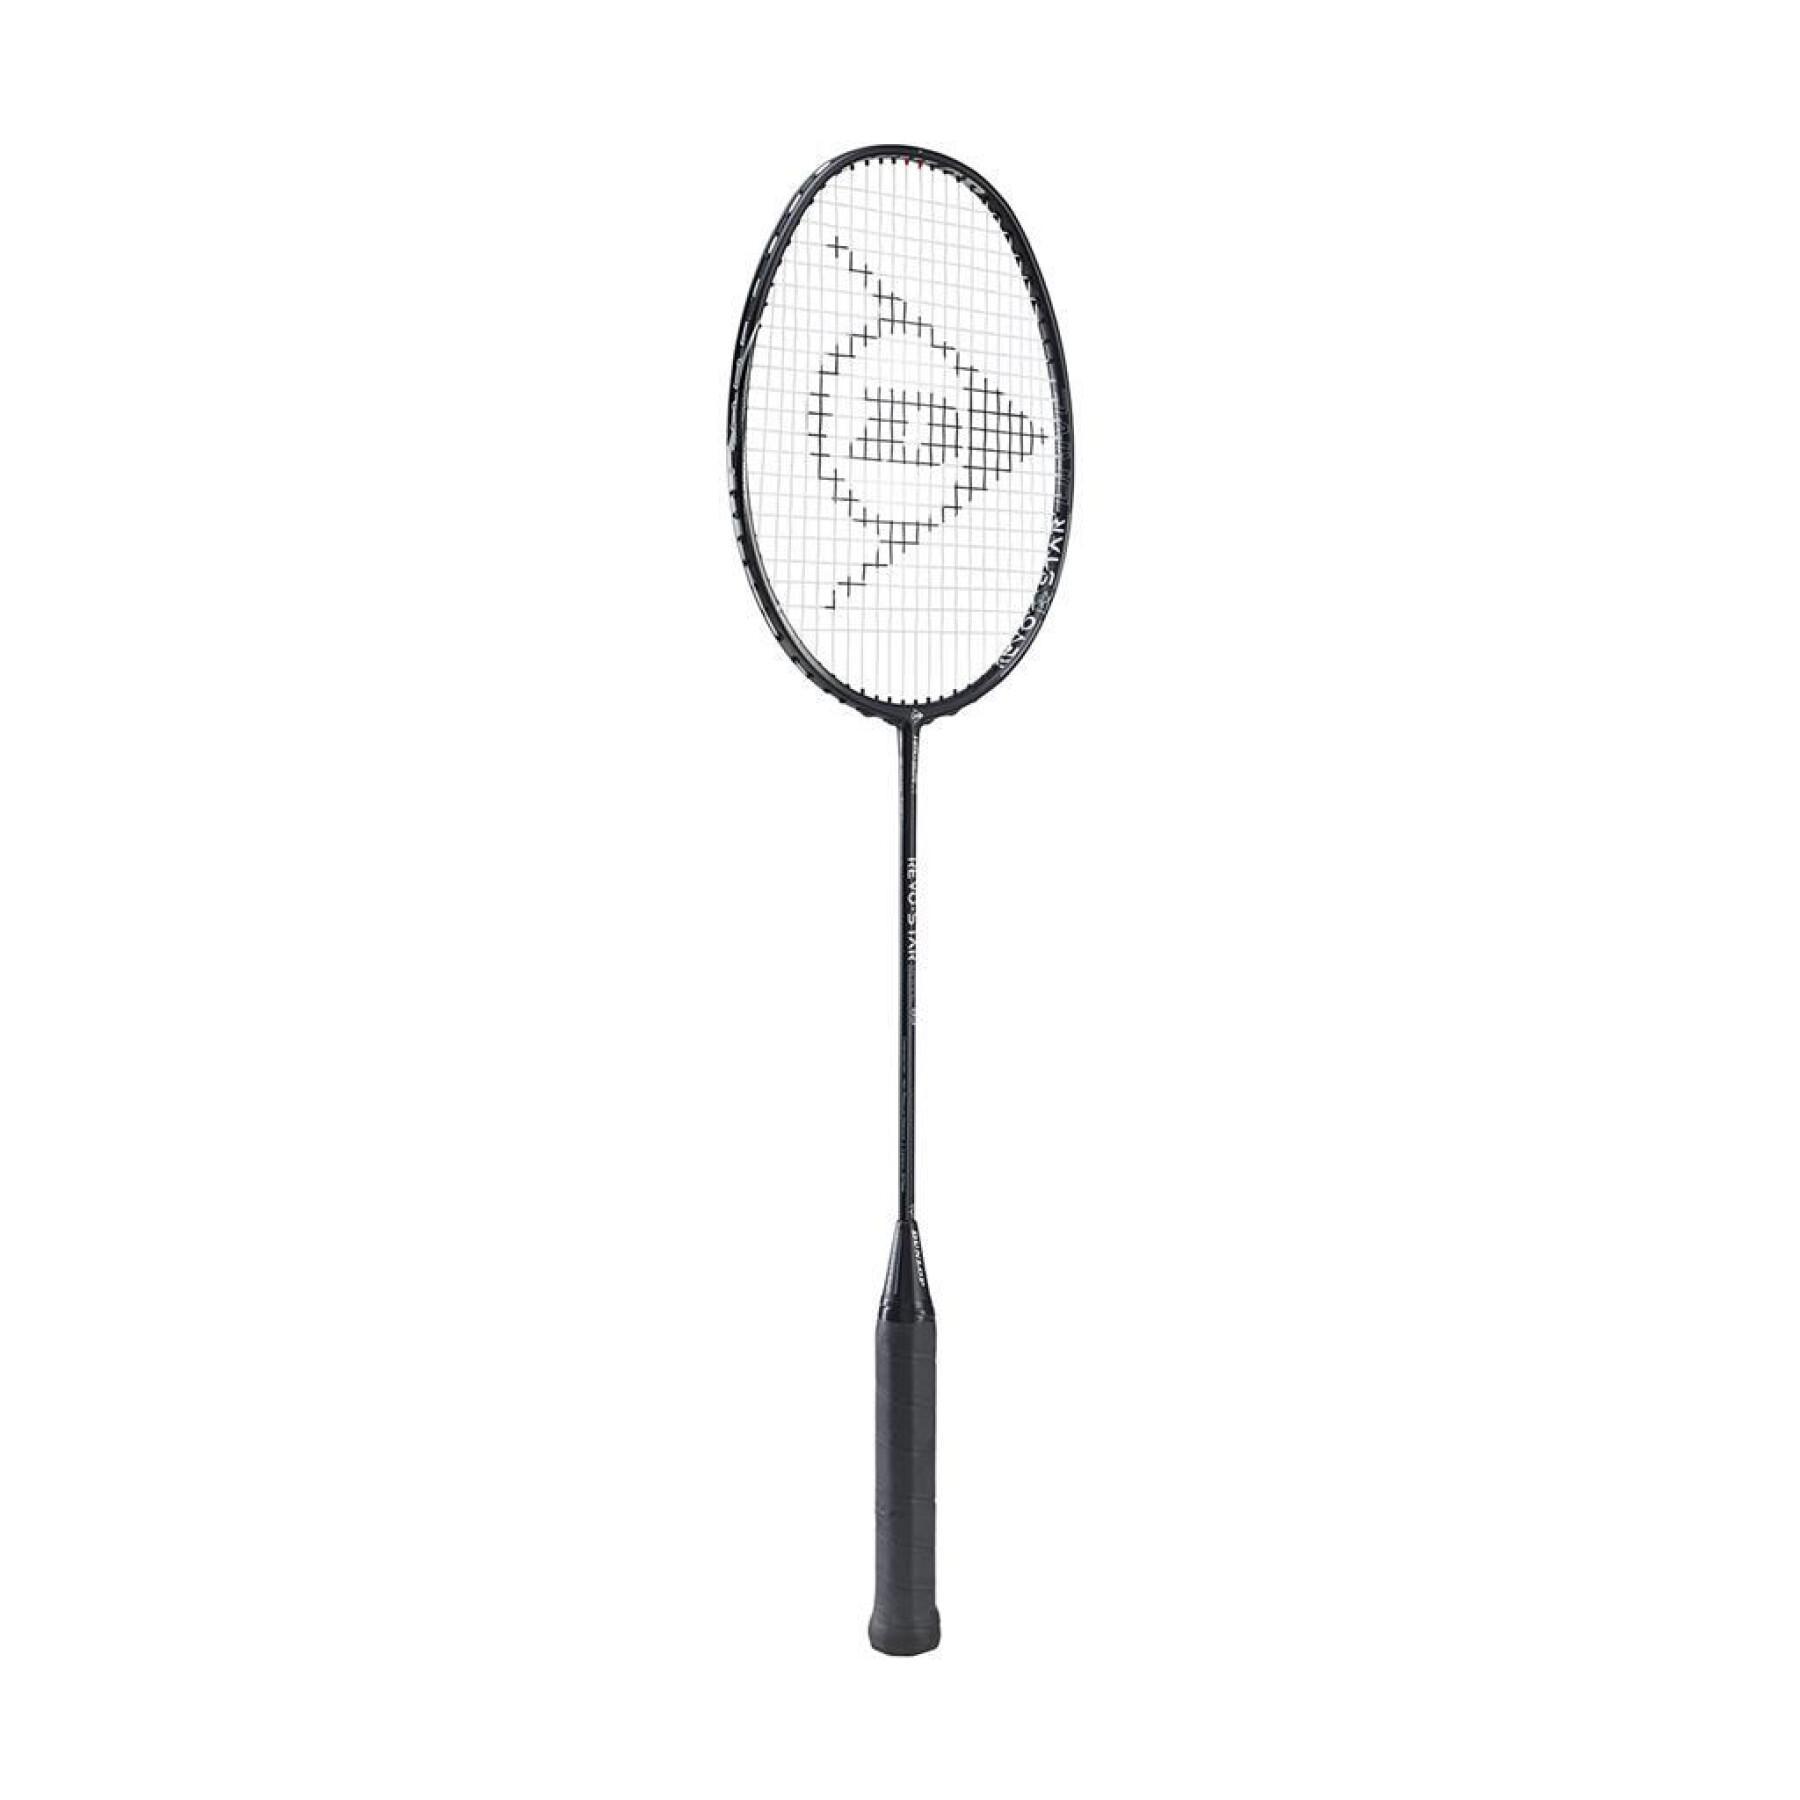 Rakieta do badmintona Dunlop Revo-Star Drive 83 G3 Hl